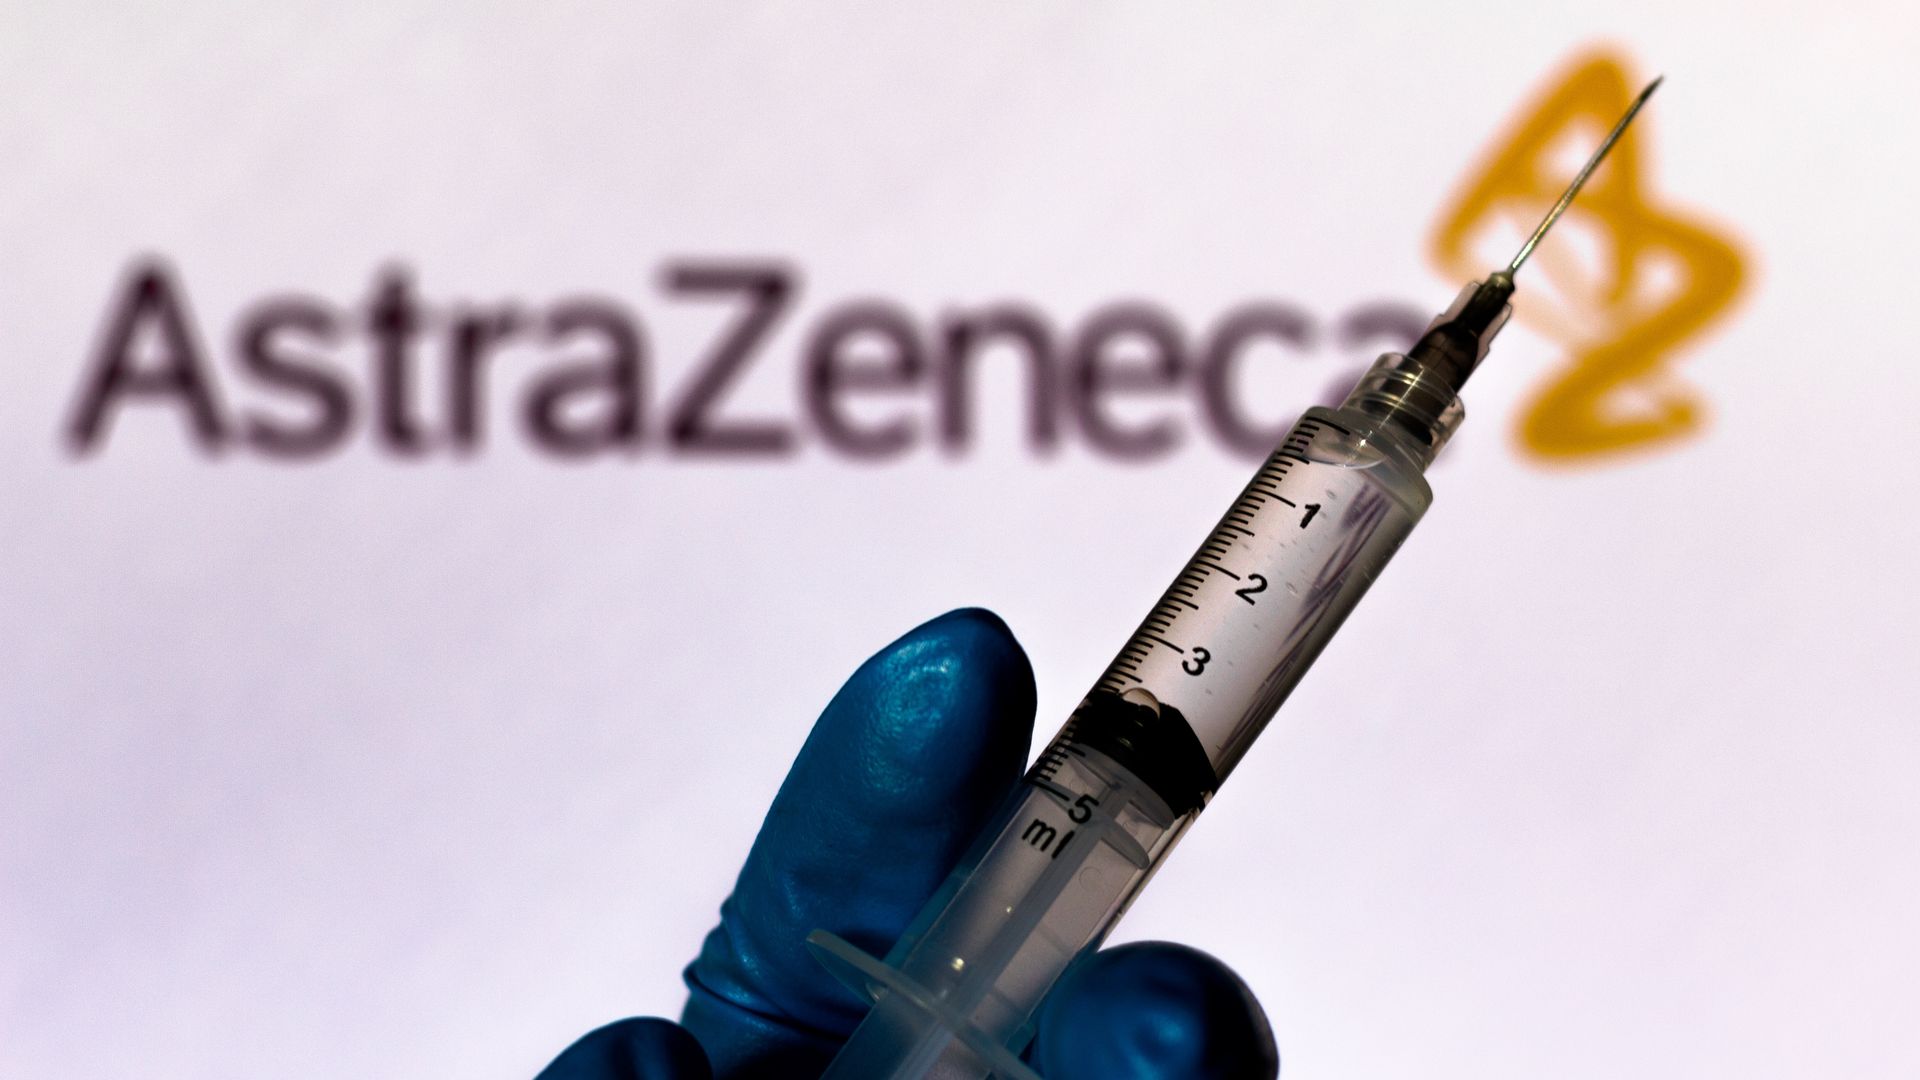 AstraZeneca to resume coronavirus vaccine trial in U.S. - Axios